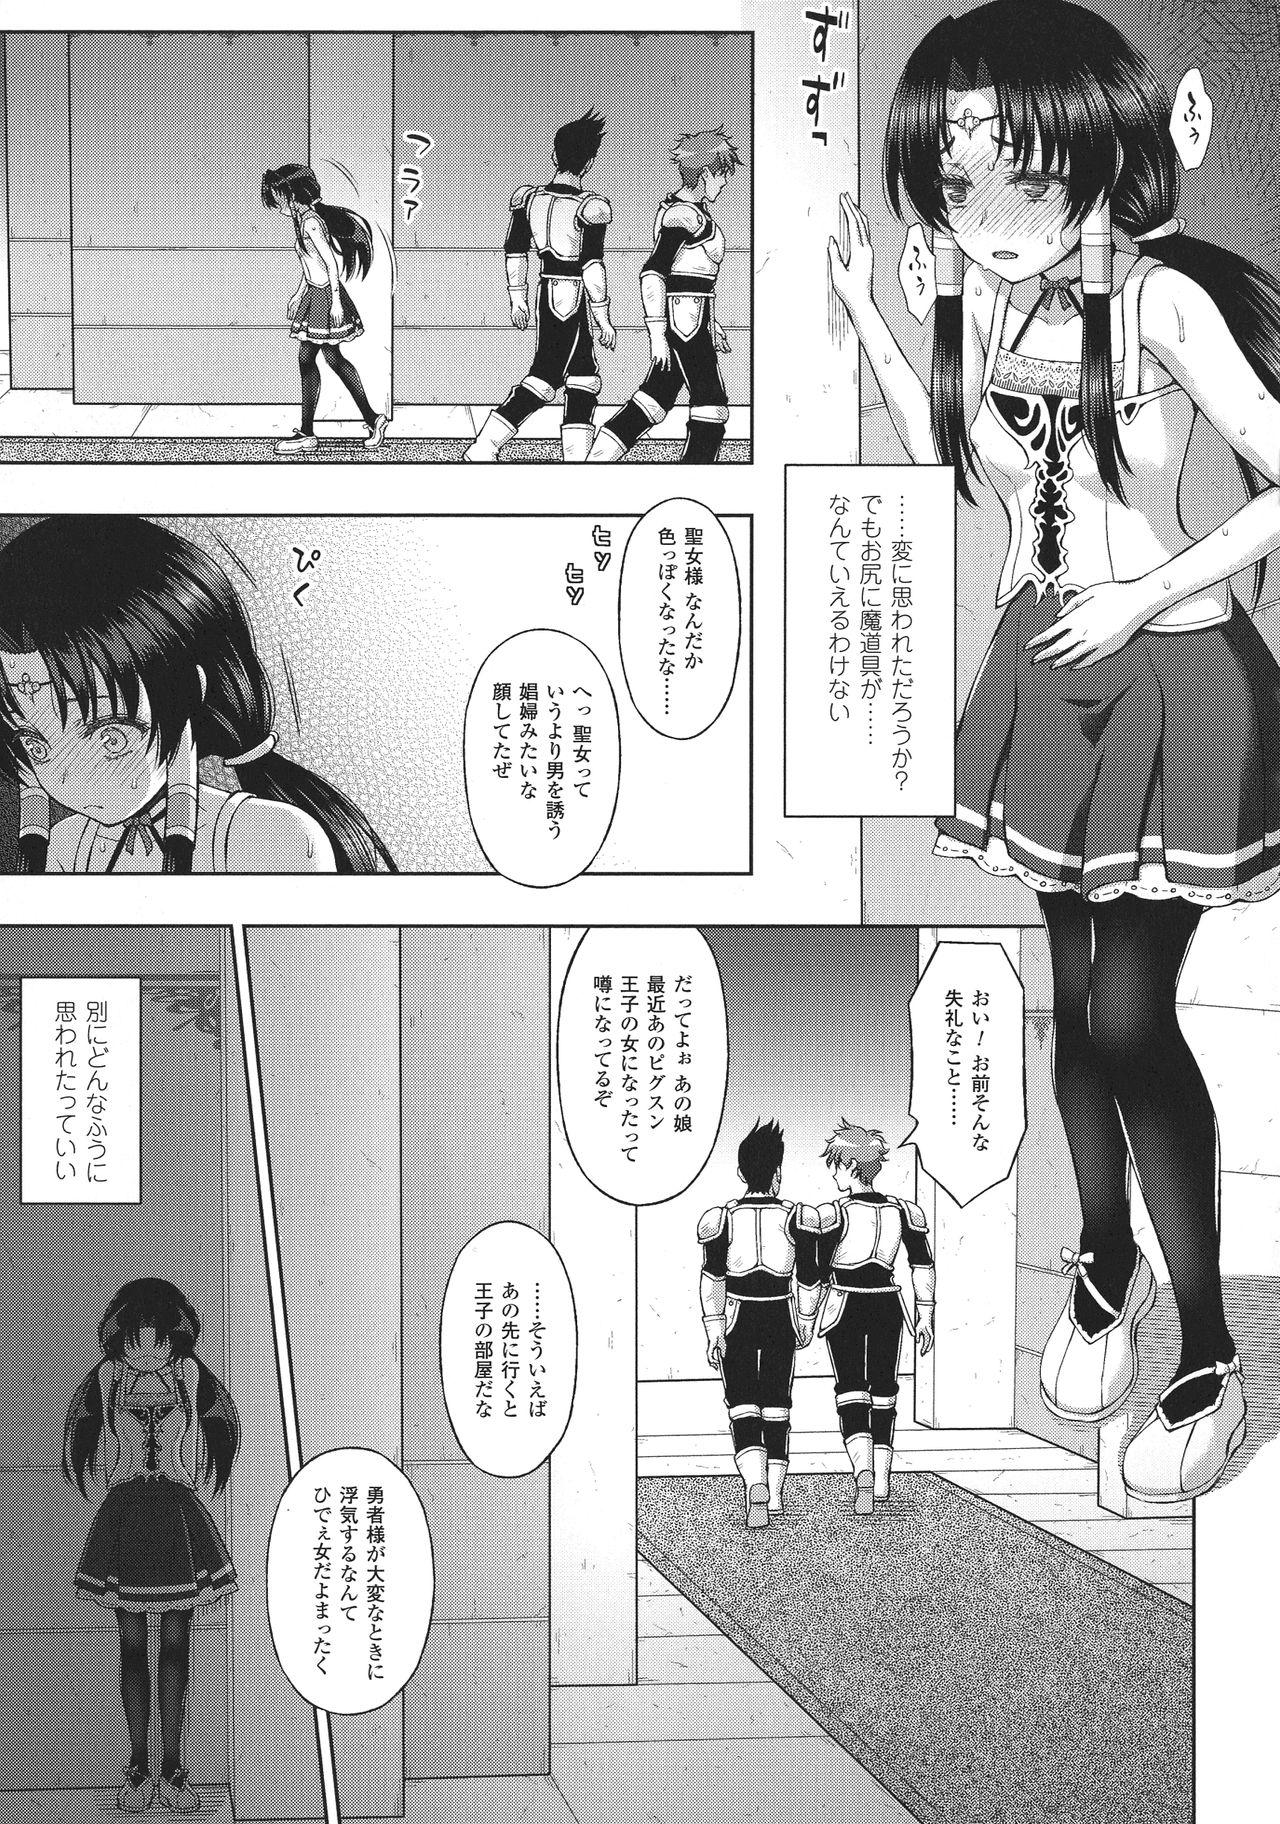 Seigi no Heroine Kangoku File DX Vol. 8 70